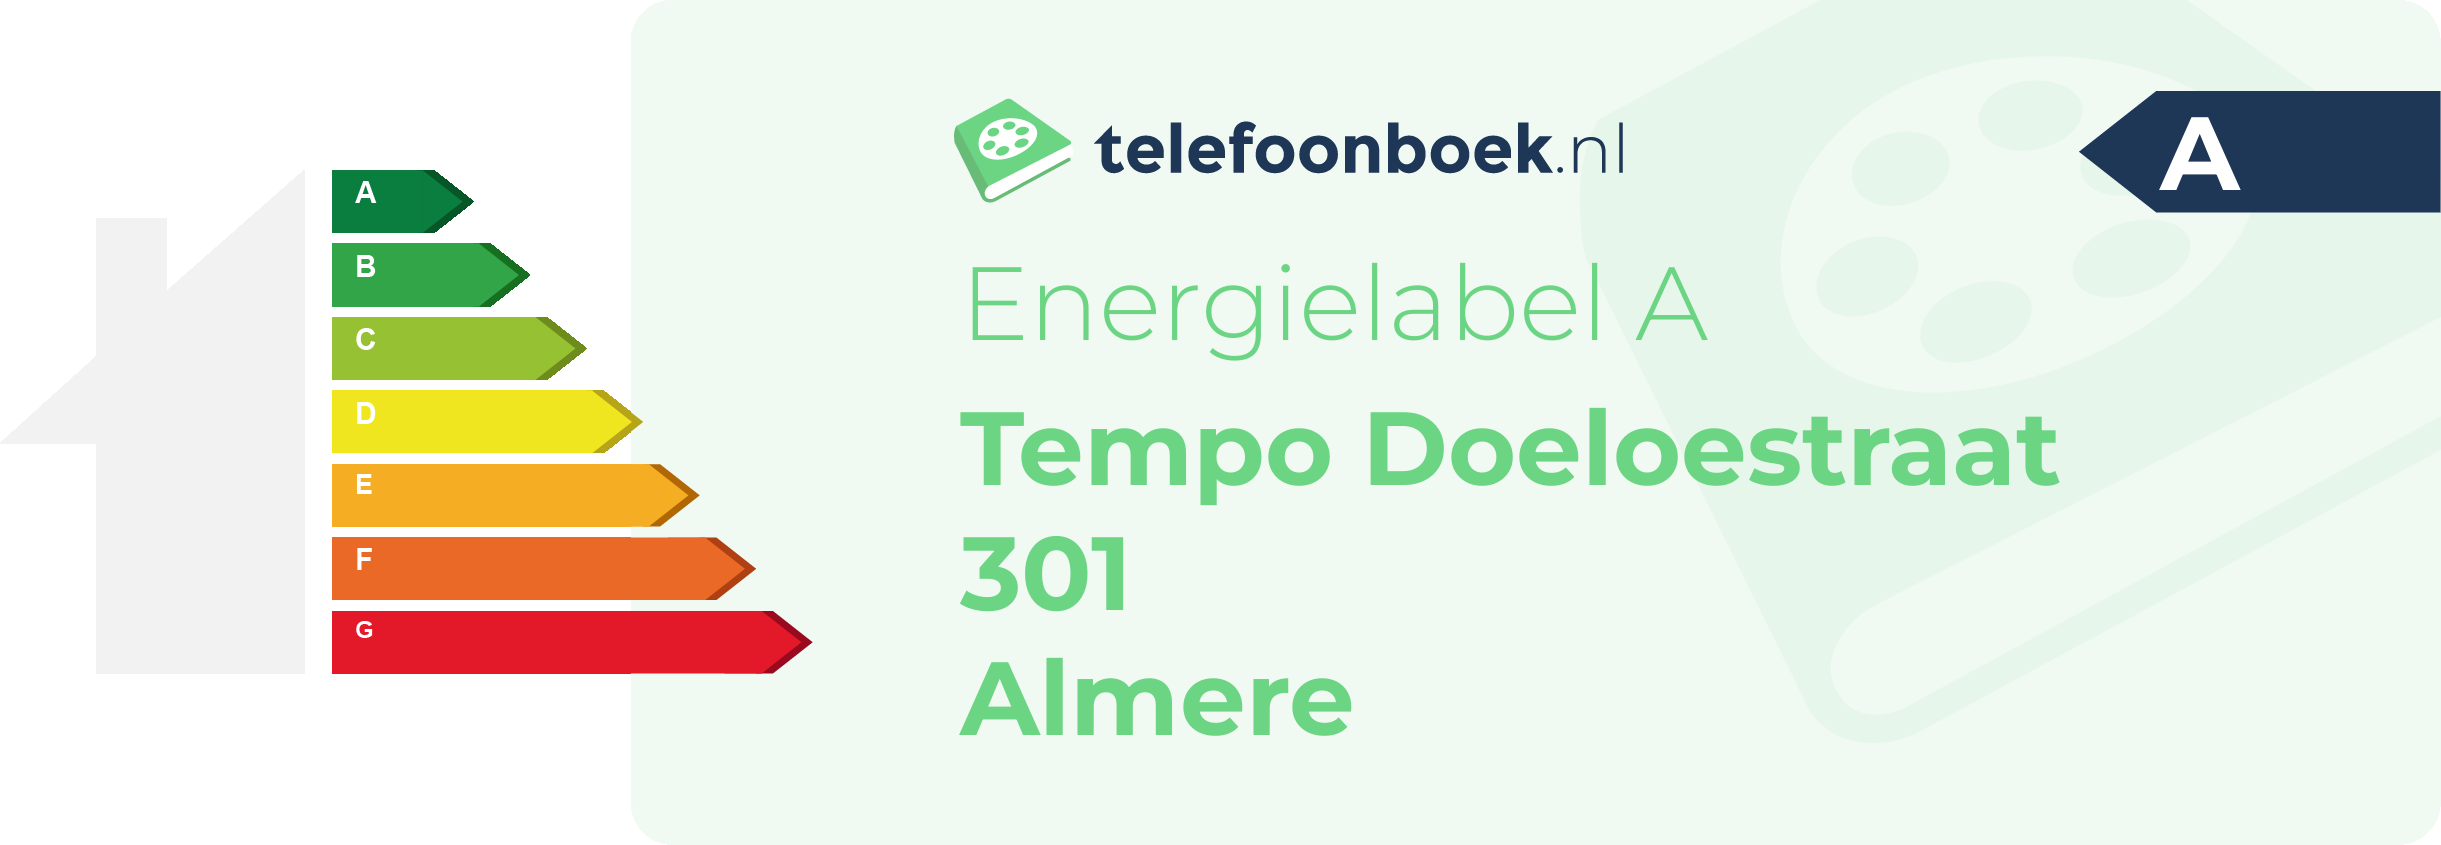 Energielabel Tempo Doeloestraat 301 Almere